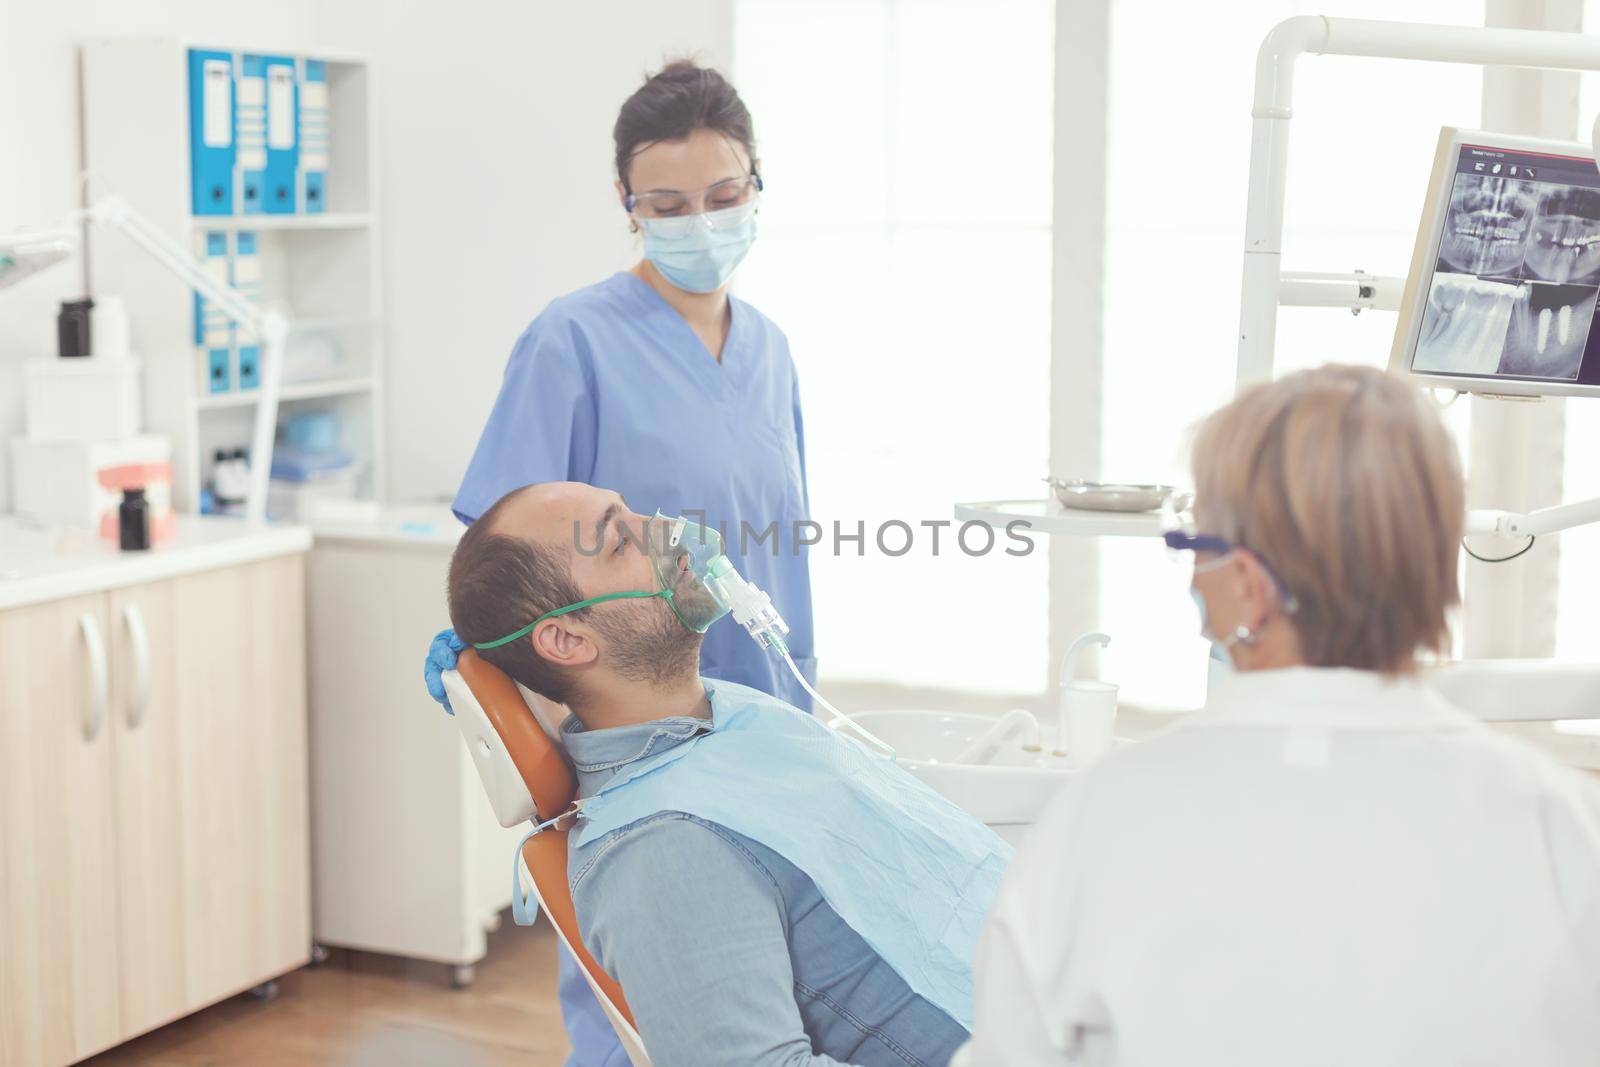 Sick patient sitting on dental chair wearing oxigen mask by DCStudio